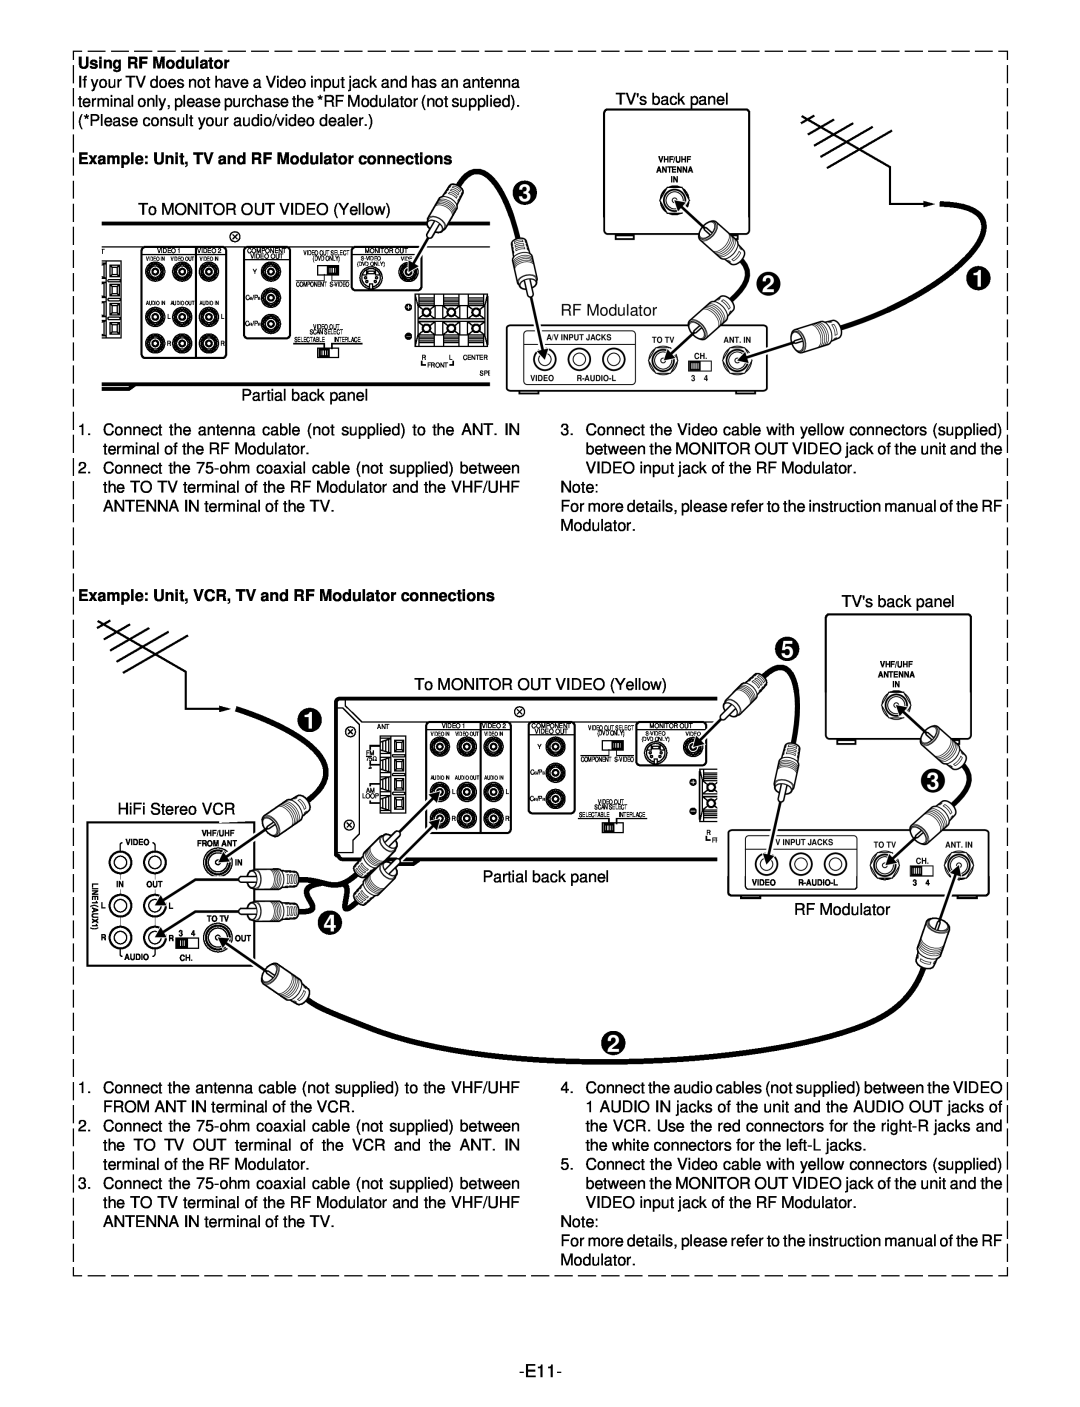 Hitachi DV-S522U instruction manual Using RF Modulator, Example Unit, TV and RF Modulator connections, TVs back panel 